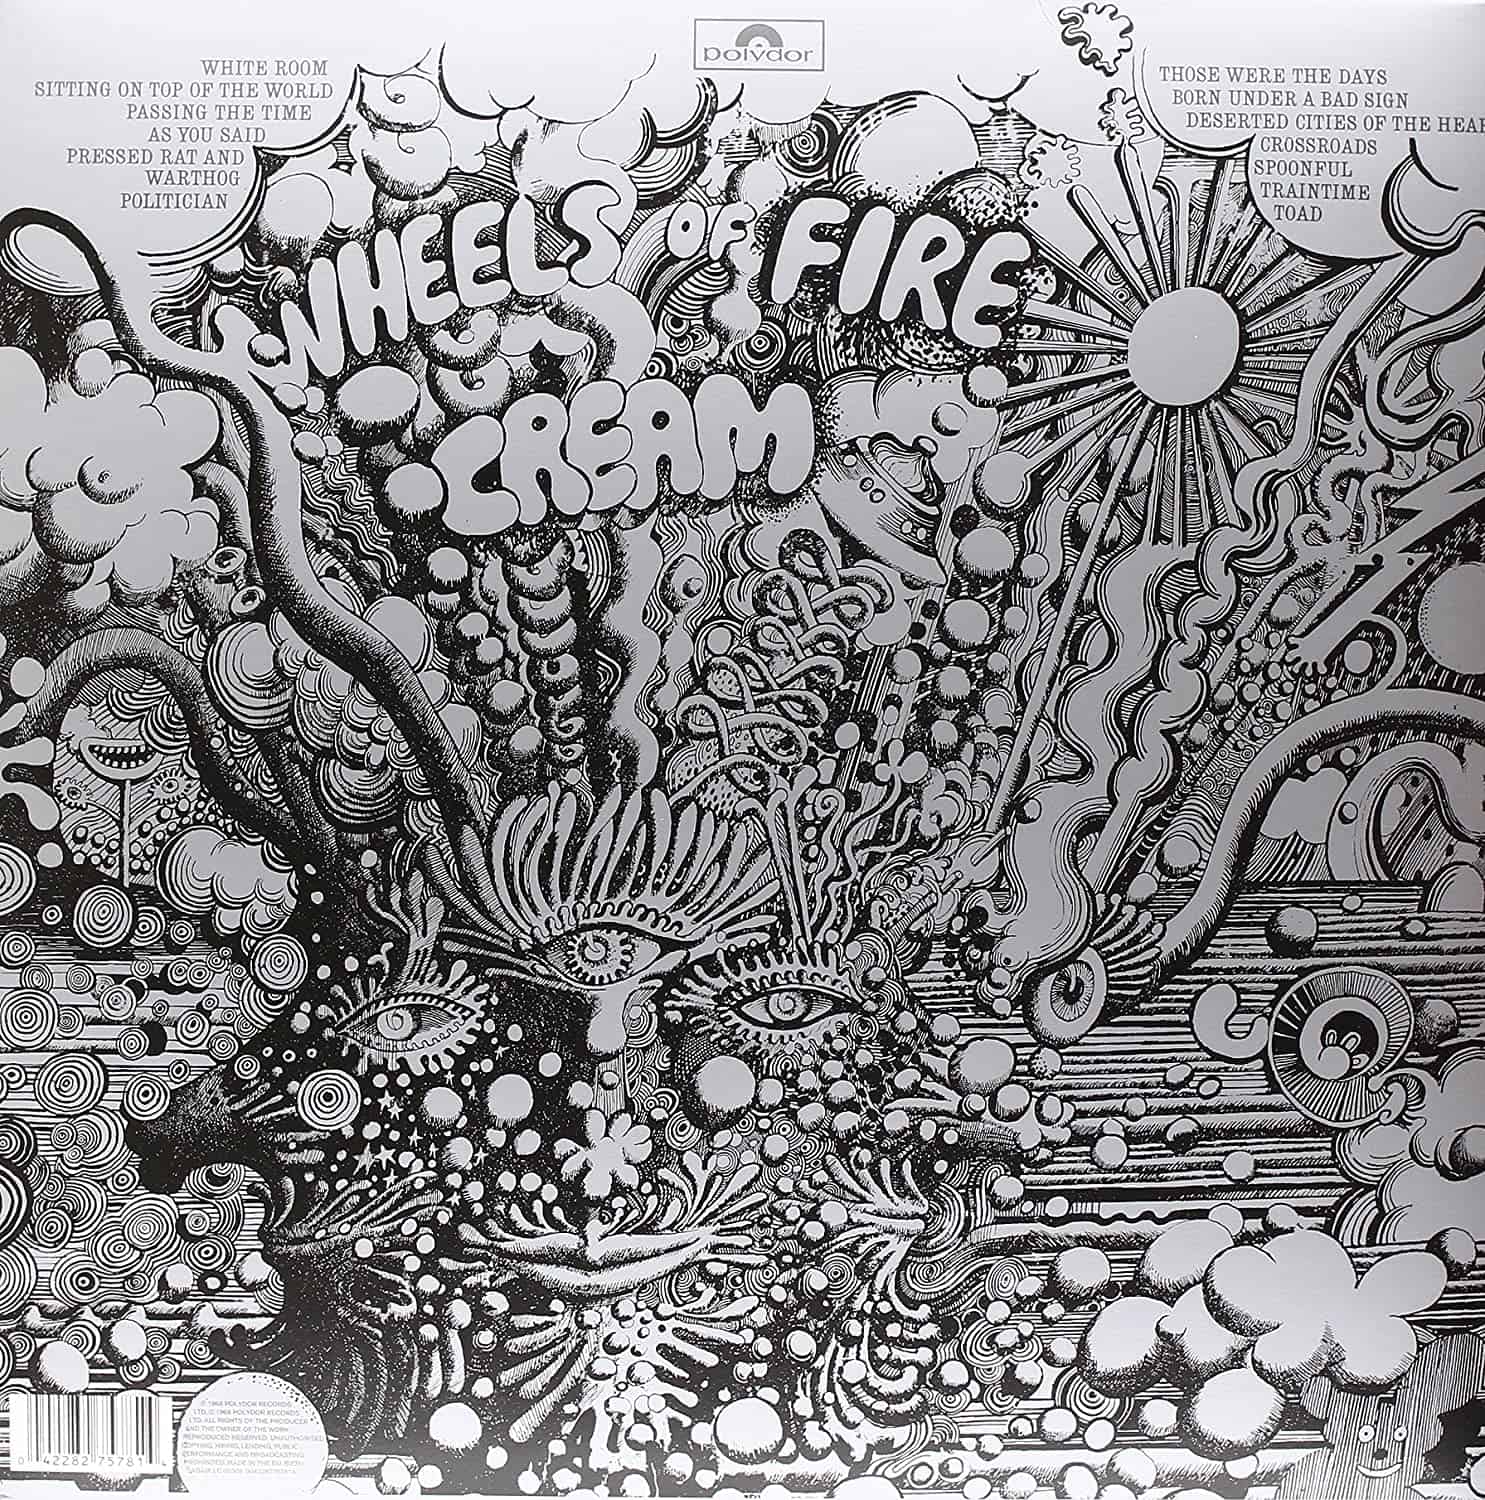 Cream-Wheels-of-Fire-vinyl-record-album-back